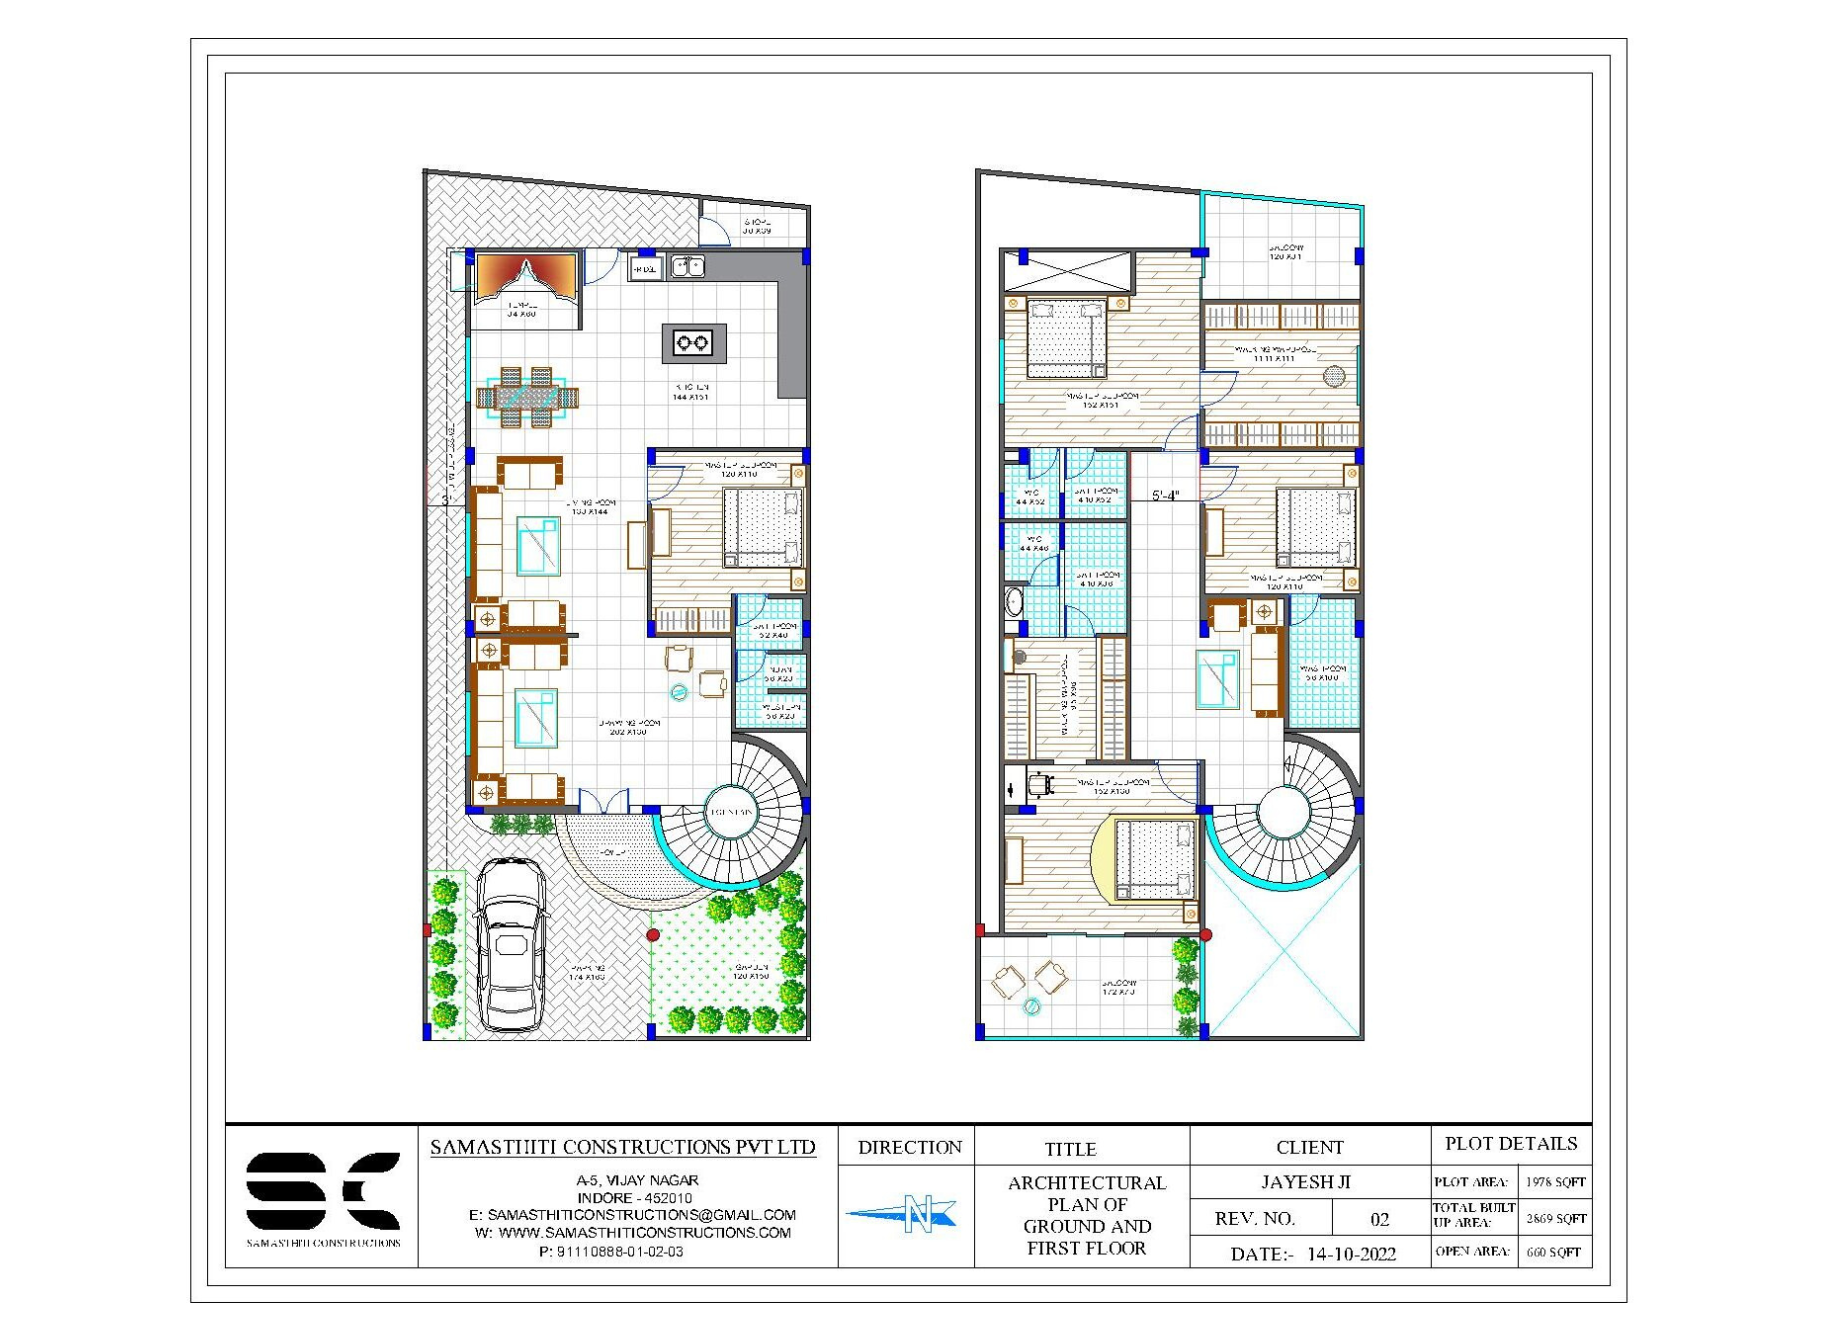 House Plan for a 30x70 sqft